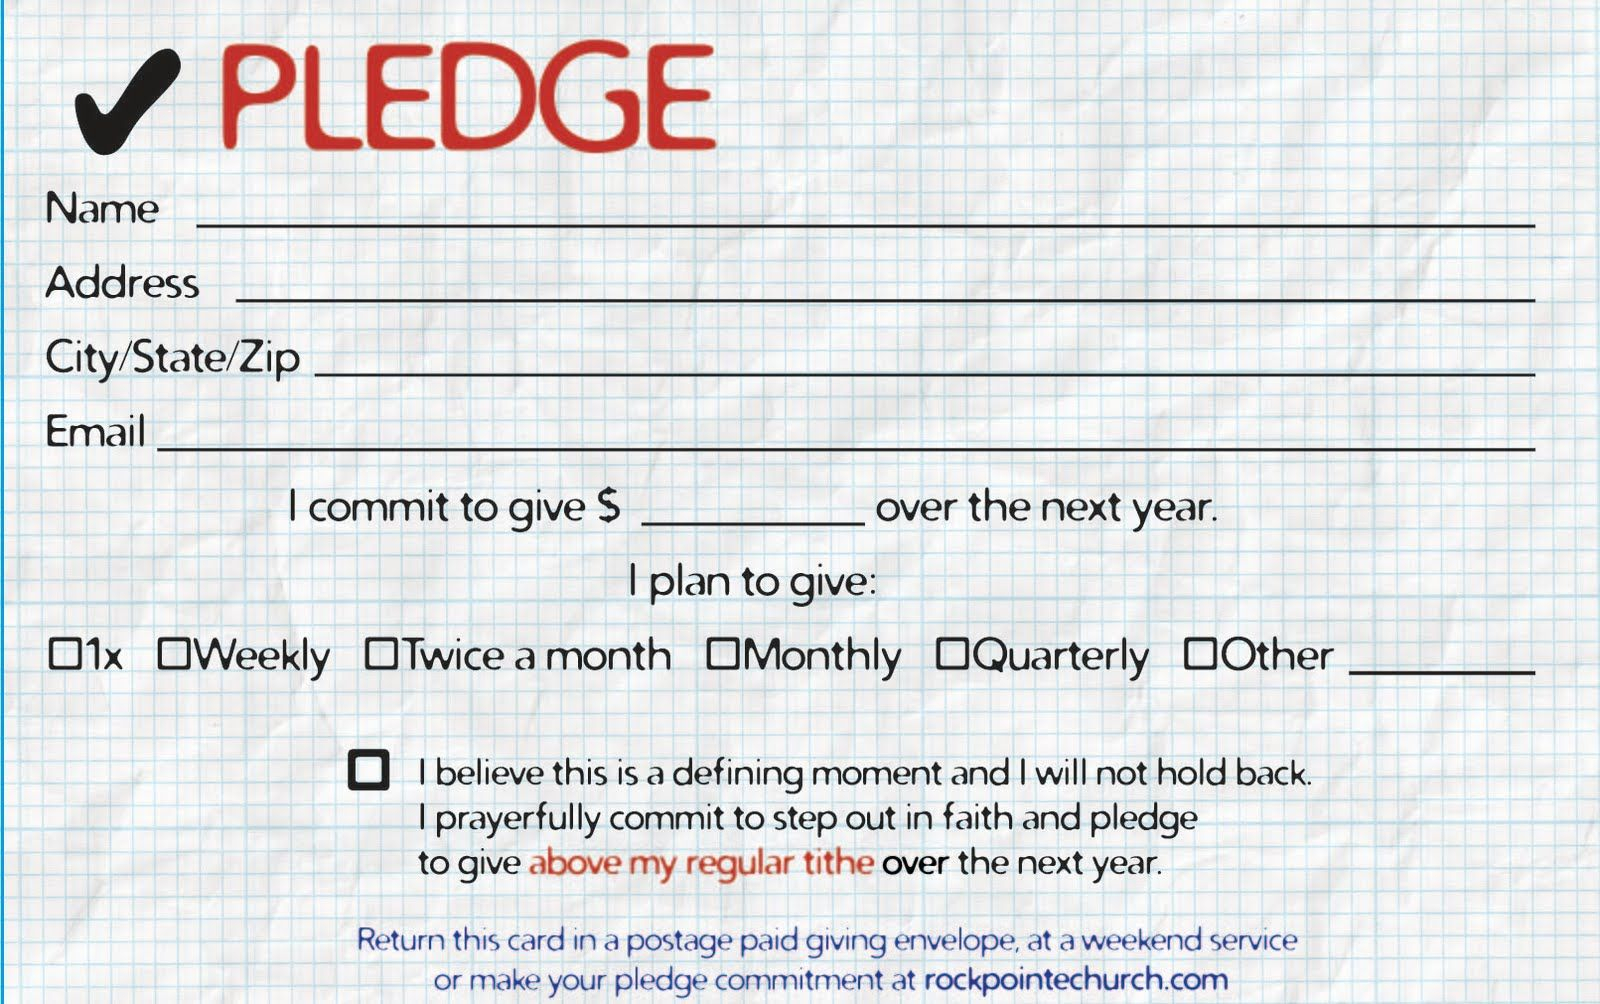 Pledge Cards For Churches | Pledge Card Templates | Card With Church Pledge Card Template